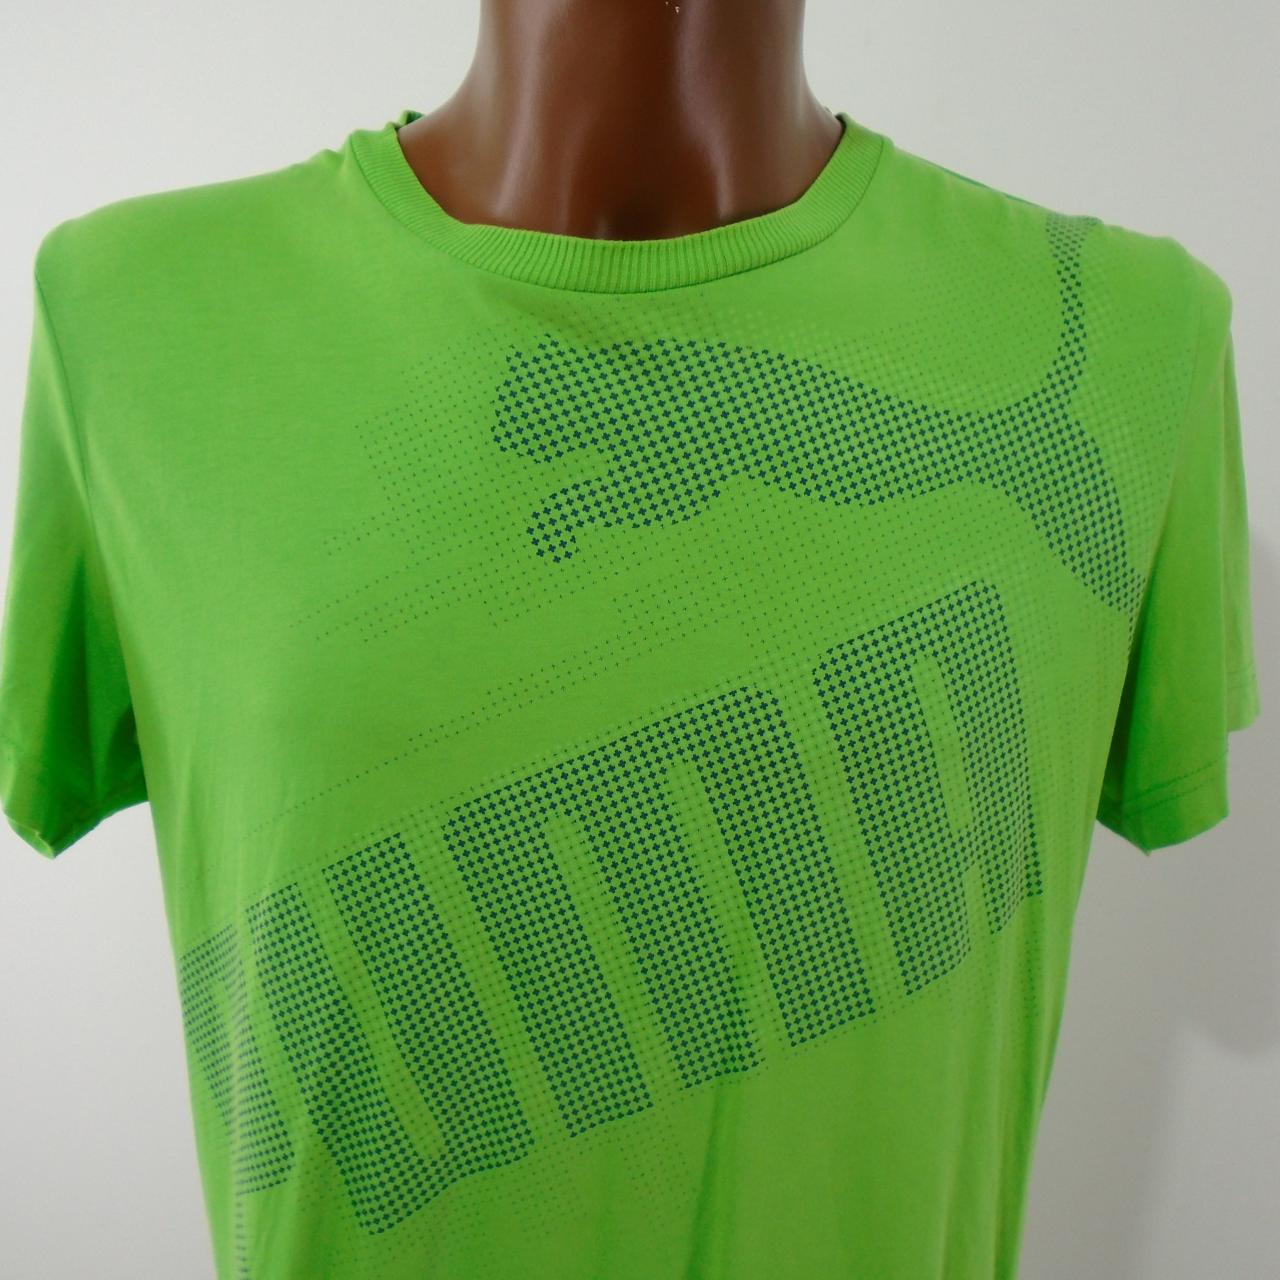 Men's T-Shirt Puma. Green. L. Used. Good